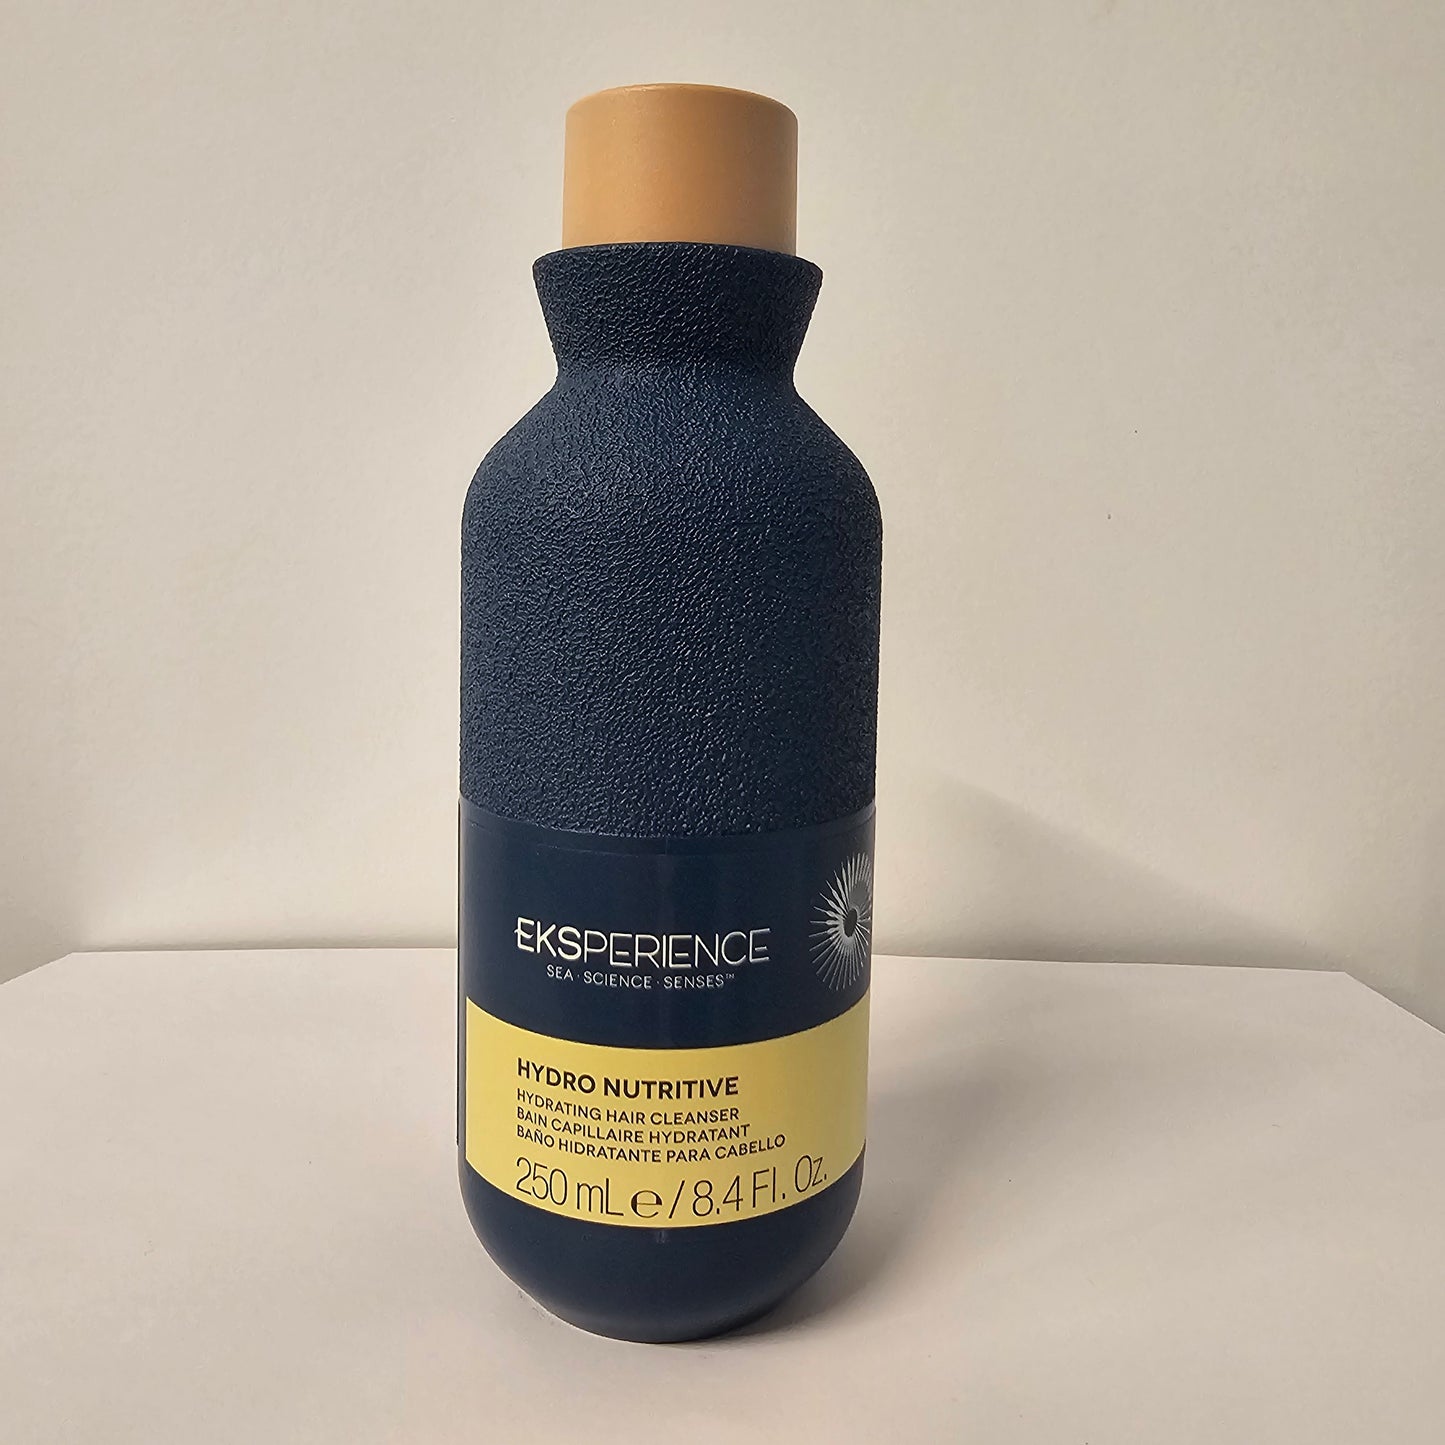 Hydro Nutritive shampoo